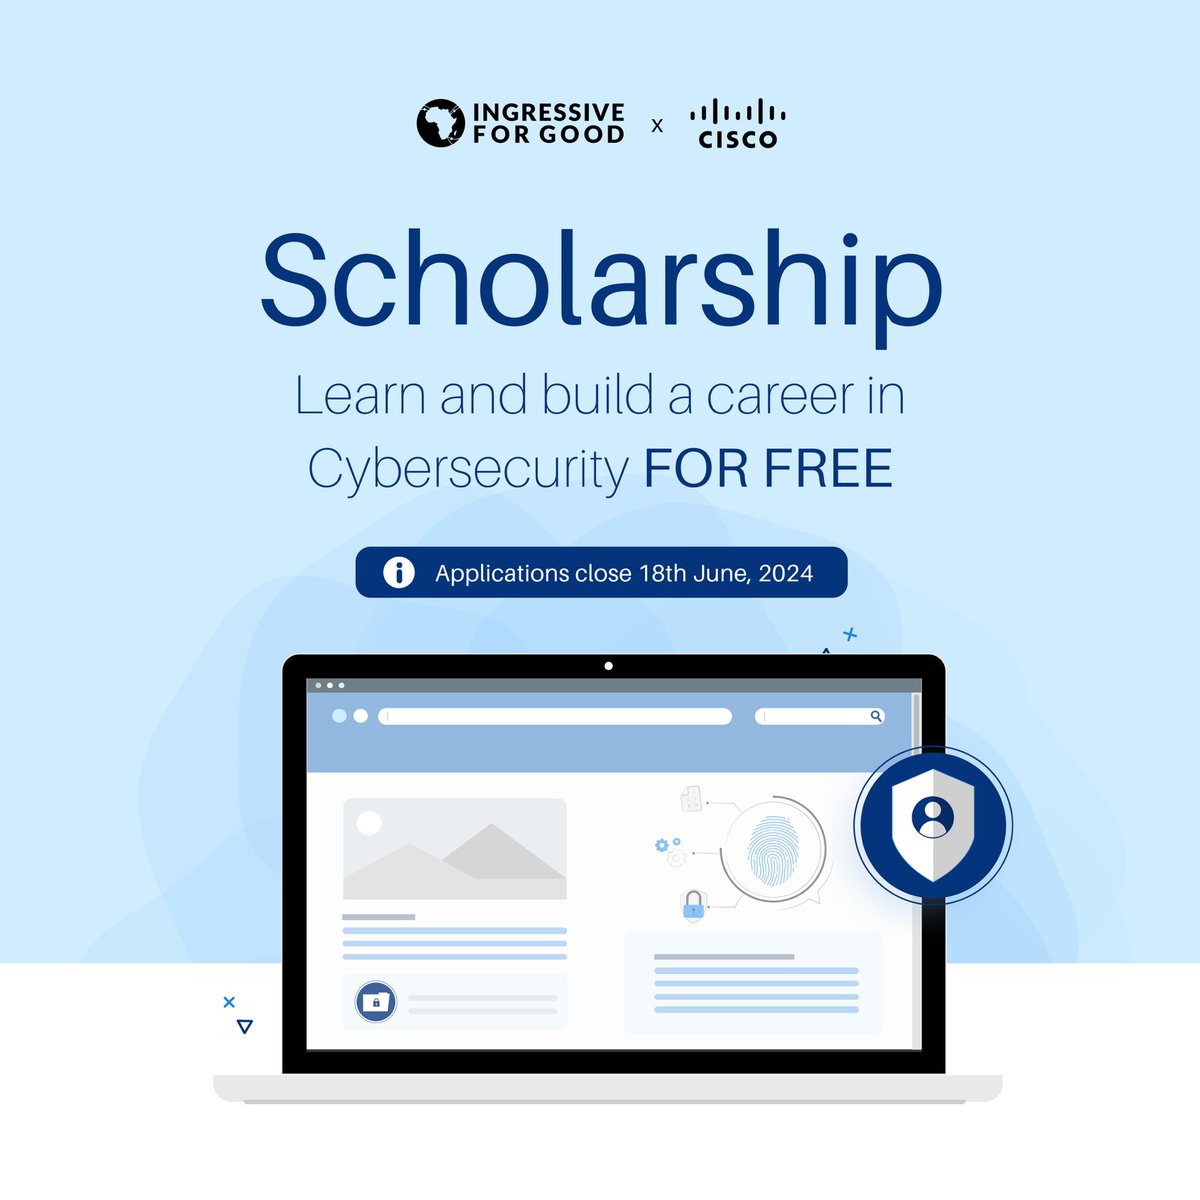 Ingressive4Good Cybersecurity Scholarship 2024 In Partnership with Cisco